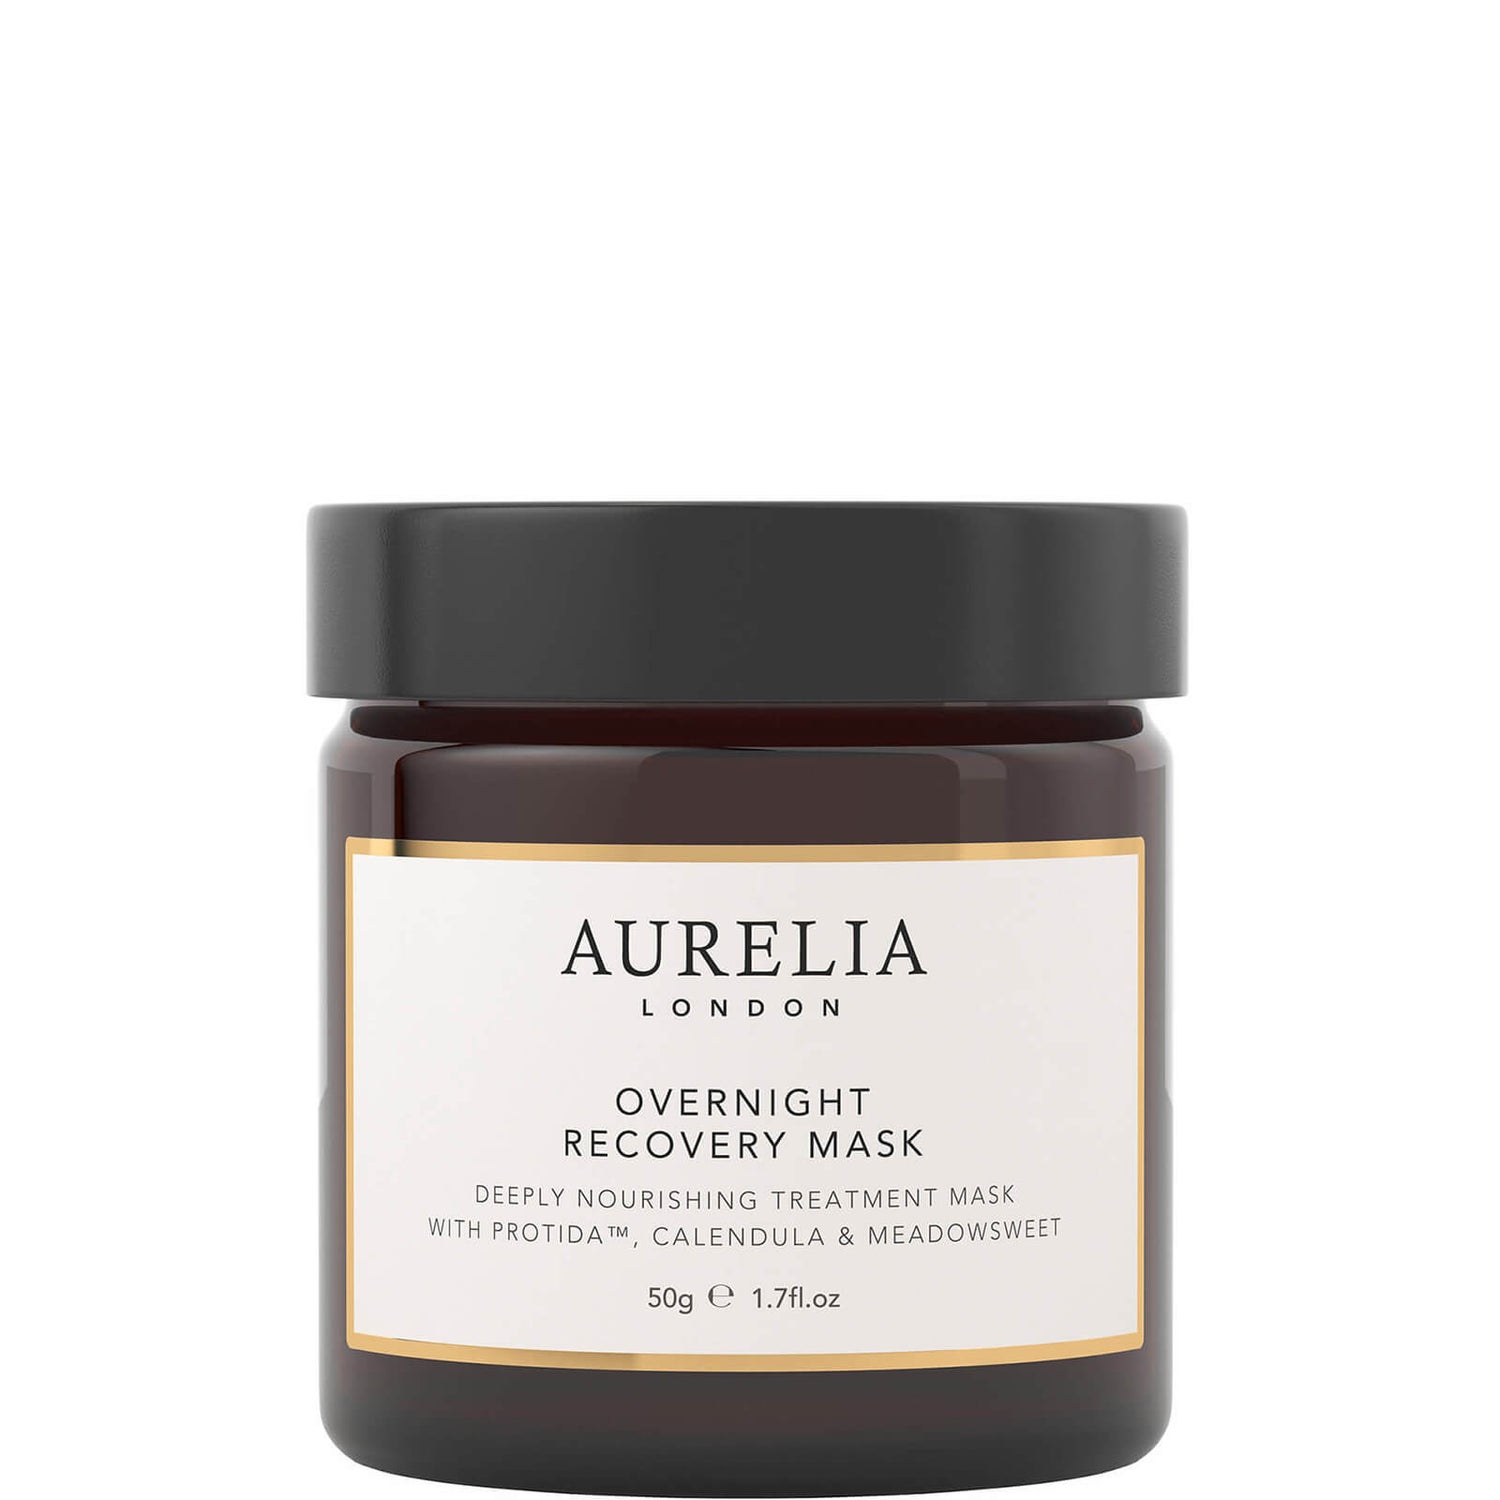 Aurelia London Overnight Recovery Mask 1.7 oz